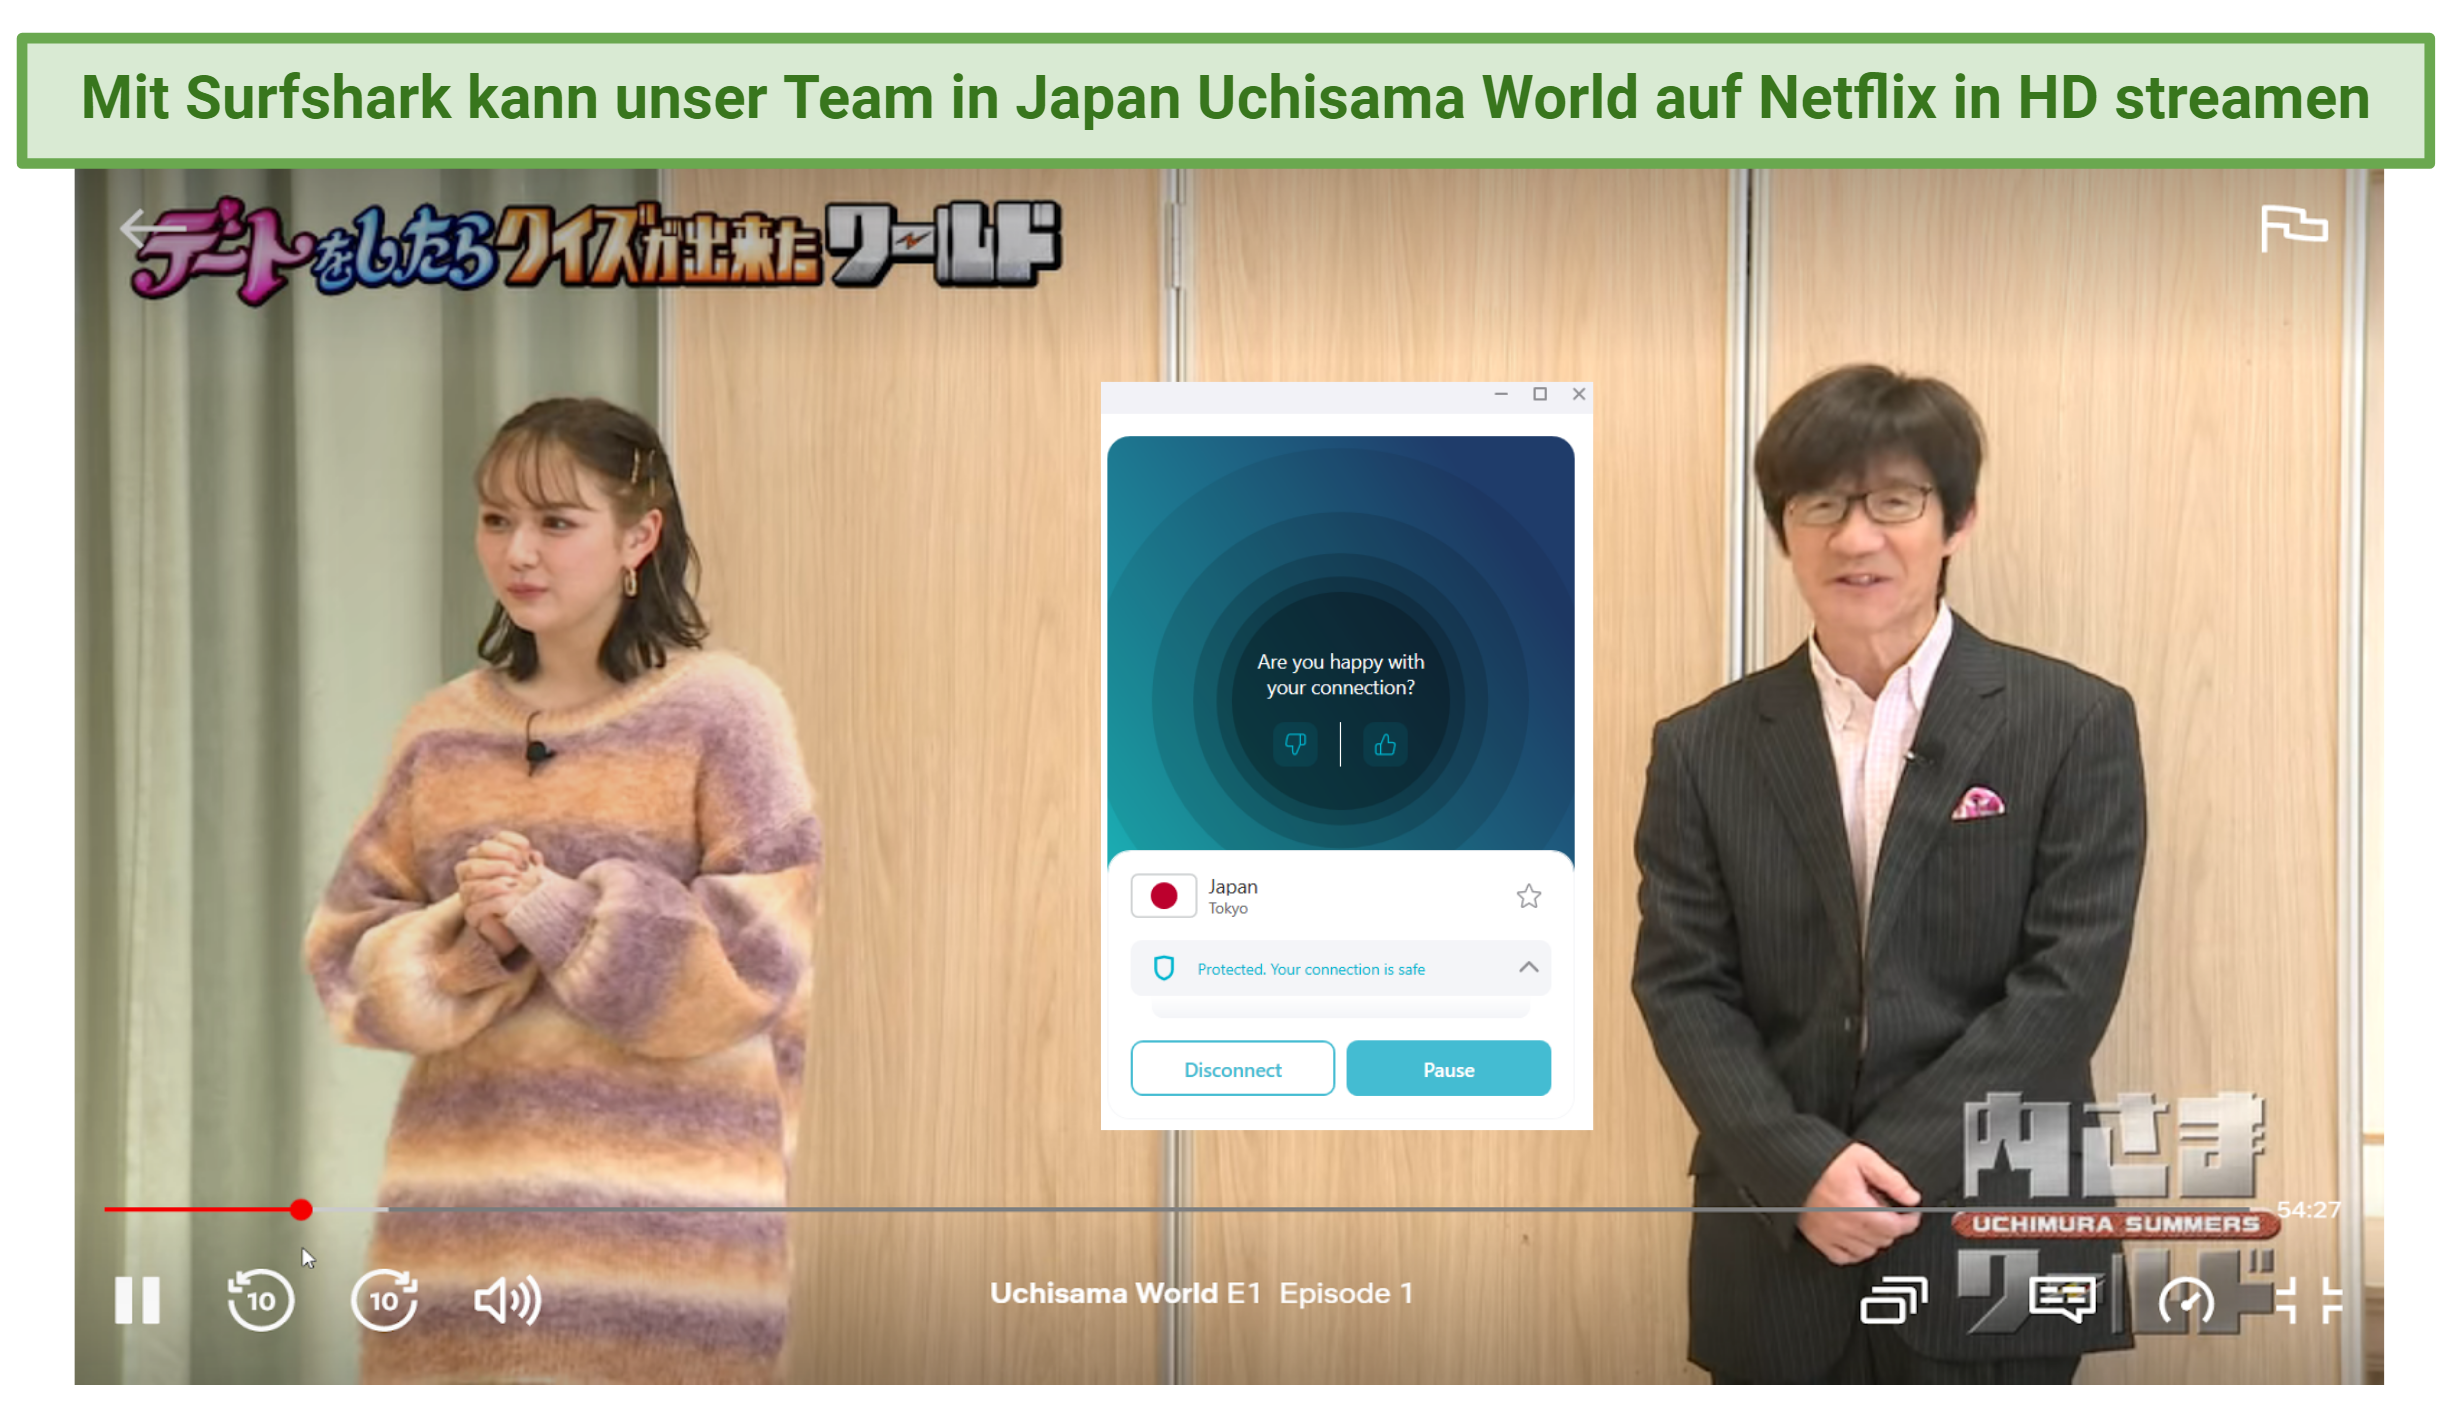 Streaming Netflix Japan from Japan while using Surfshark's Tokyo server.